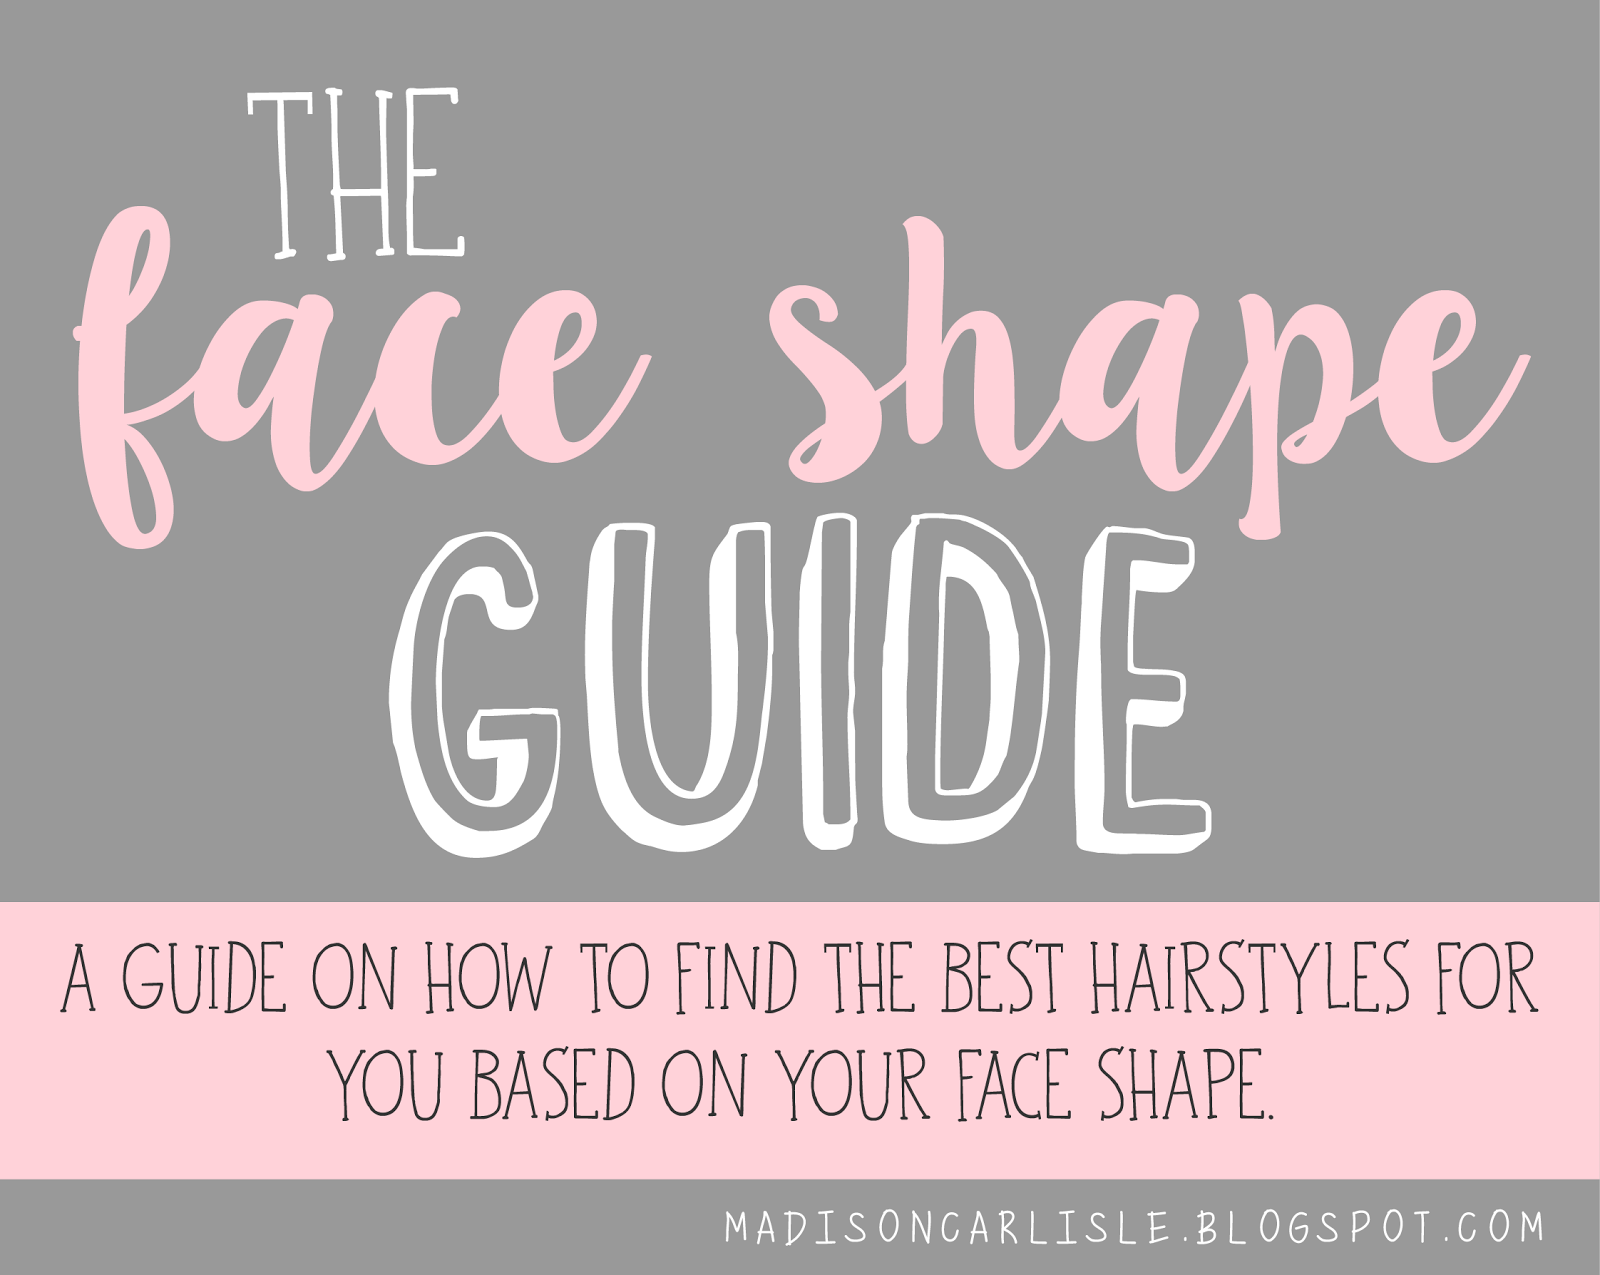 Madison Carlisle: The Face Shape Guide